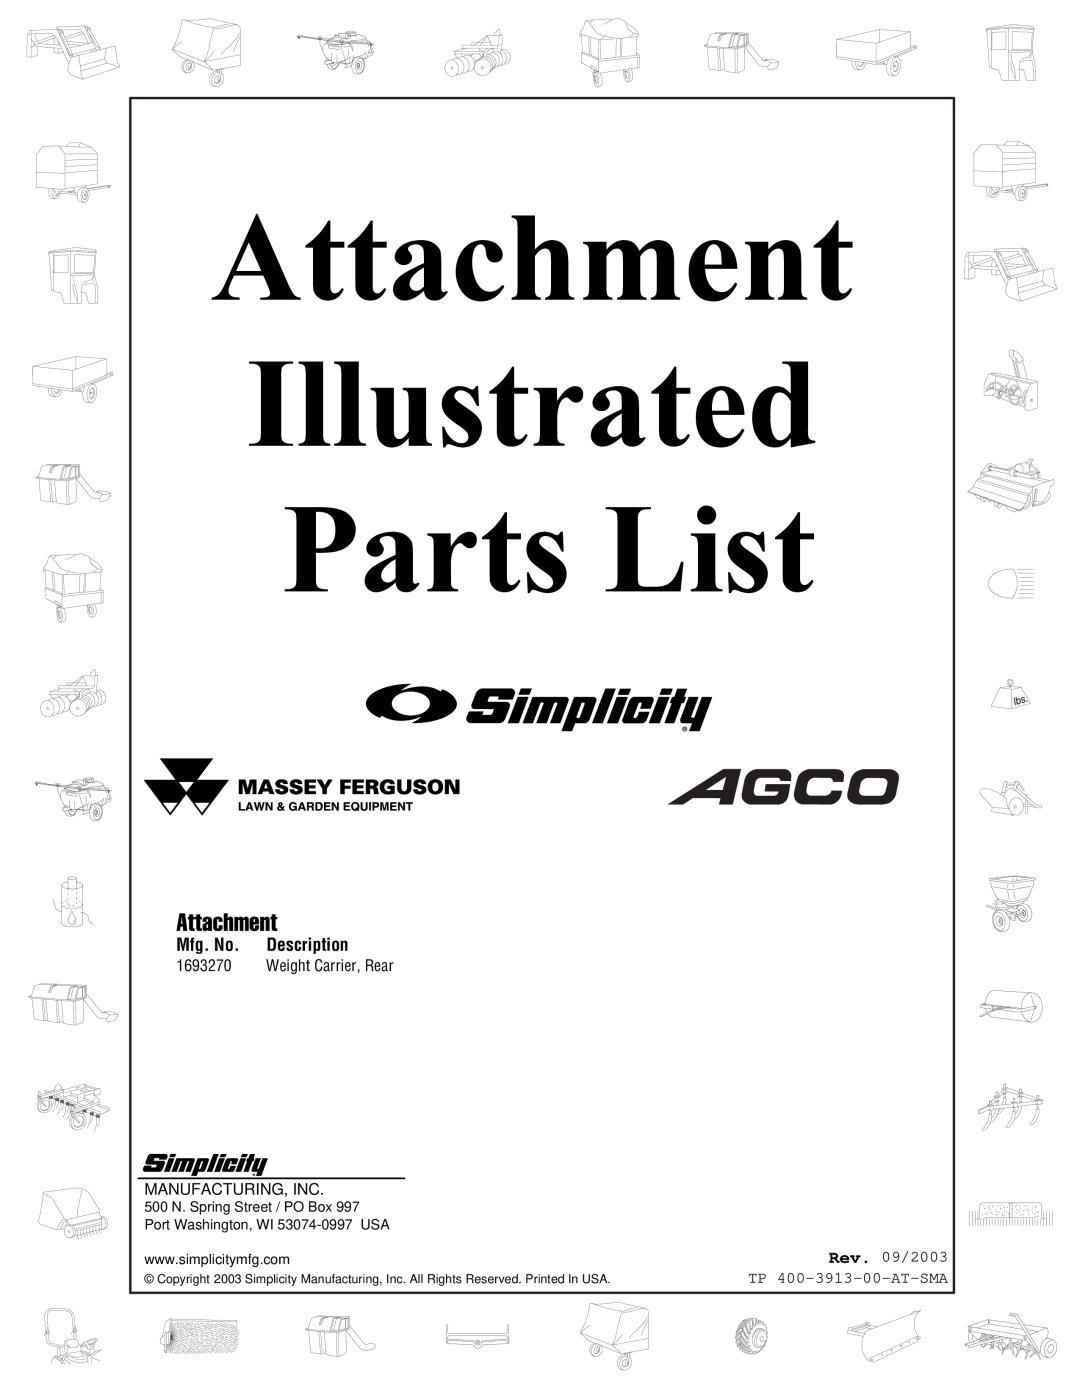 Snapper manual Mfg. No. Description, Rev. 09/2003, TP 400-3913-00-AT-SMA, Attachment Illustrated Parts List 